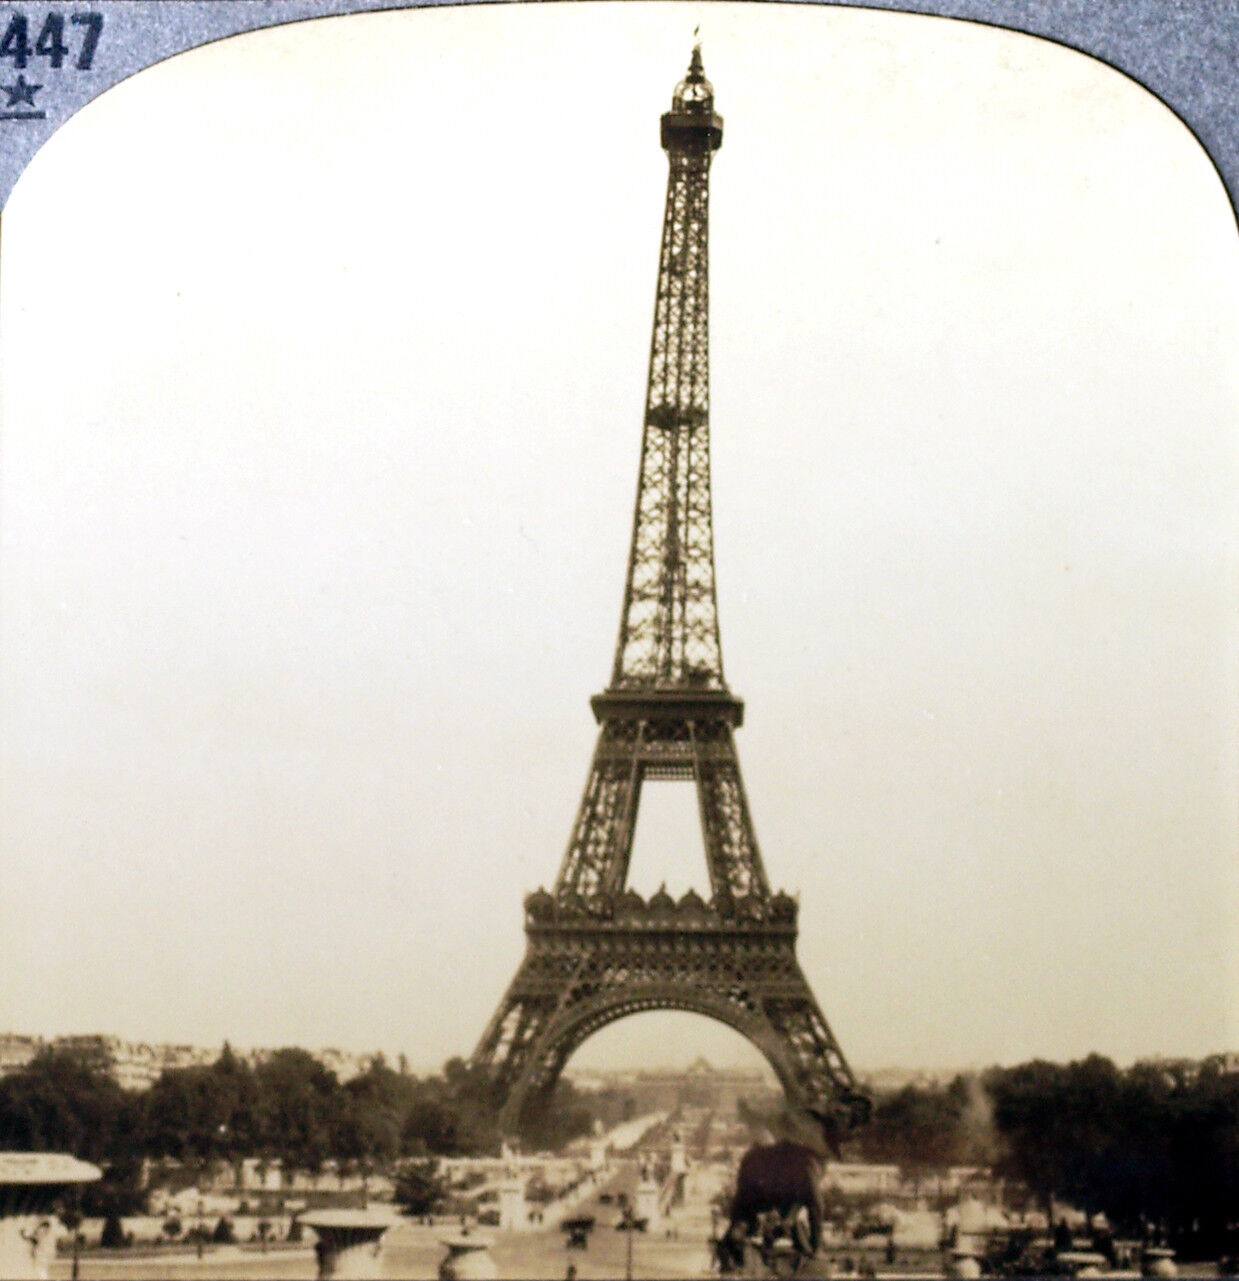 Keystone Stereoview the Eiffel Tower, Paris, France from 1930’s T600 Set #447 B